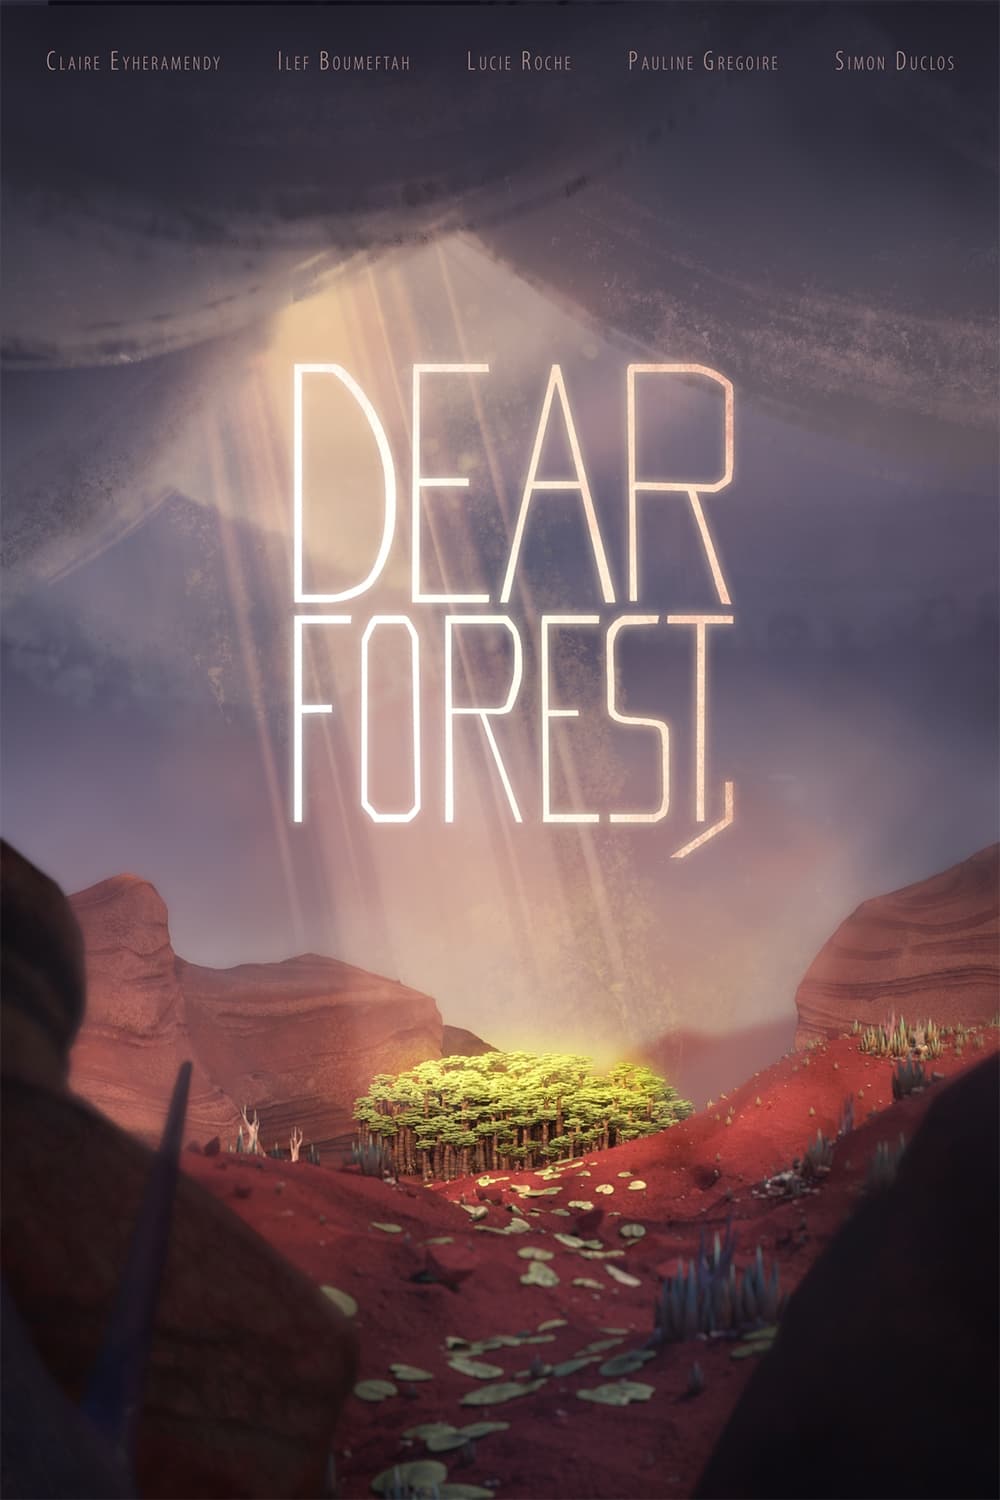 Dear Forest